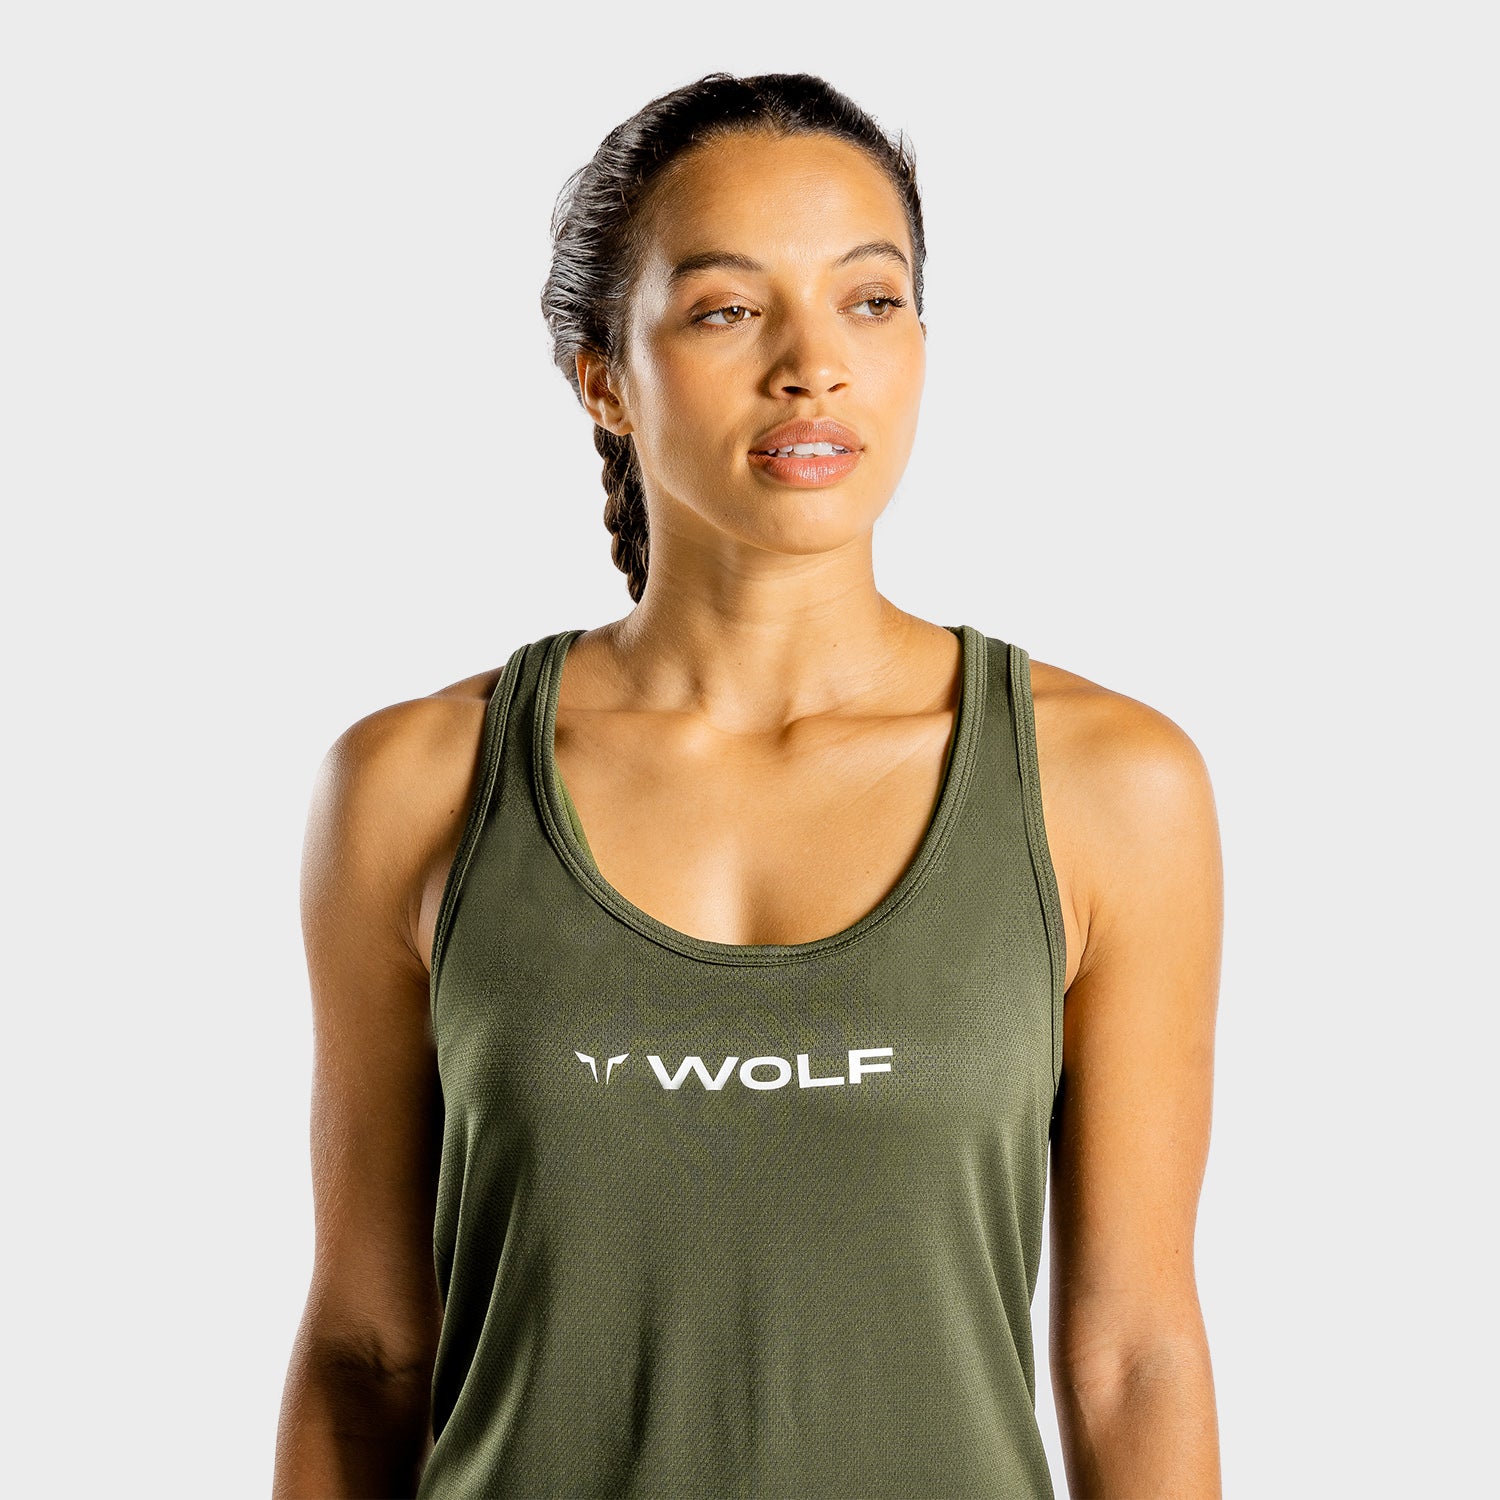 squatwolf-sports-bra-for-gym-primal-bra-khaki-workout-clothes